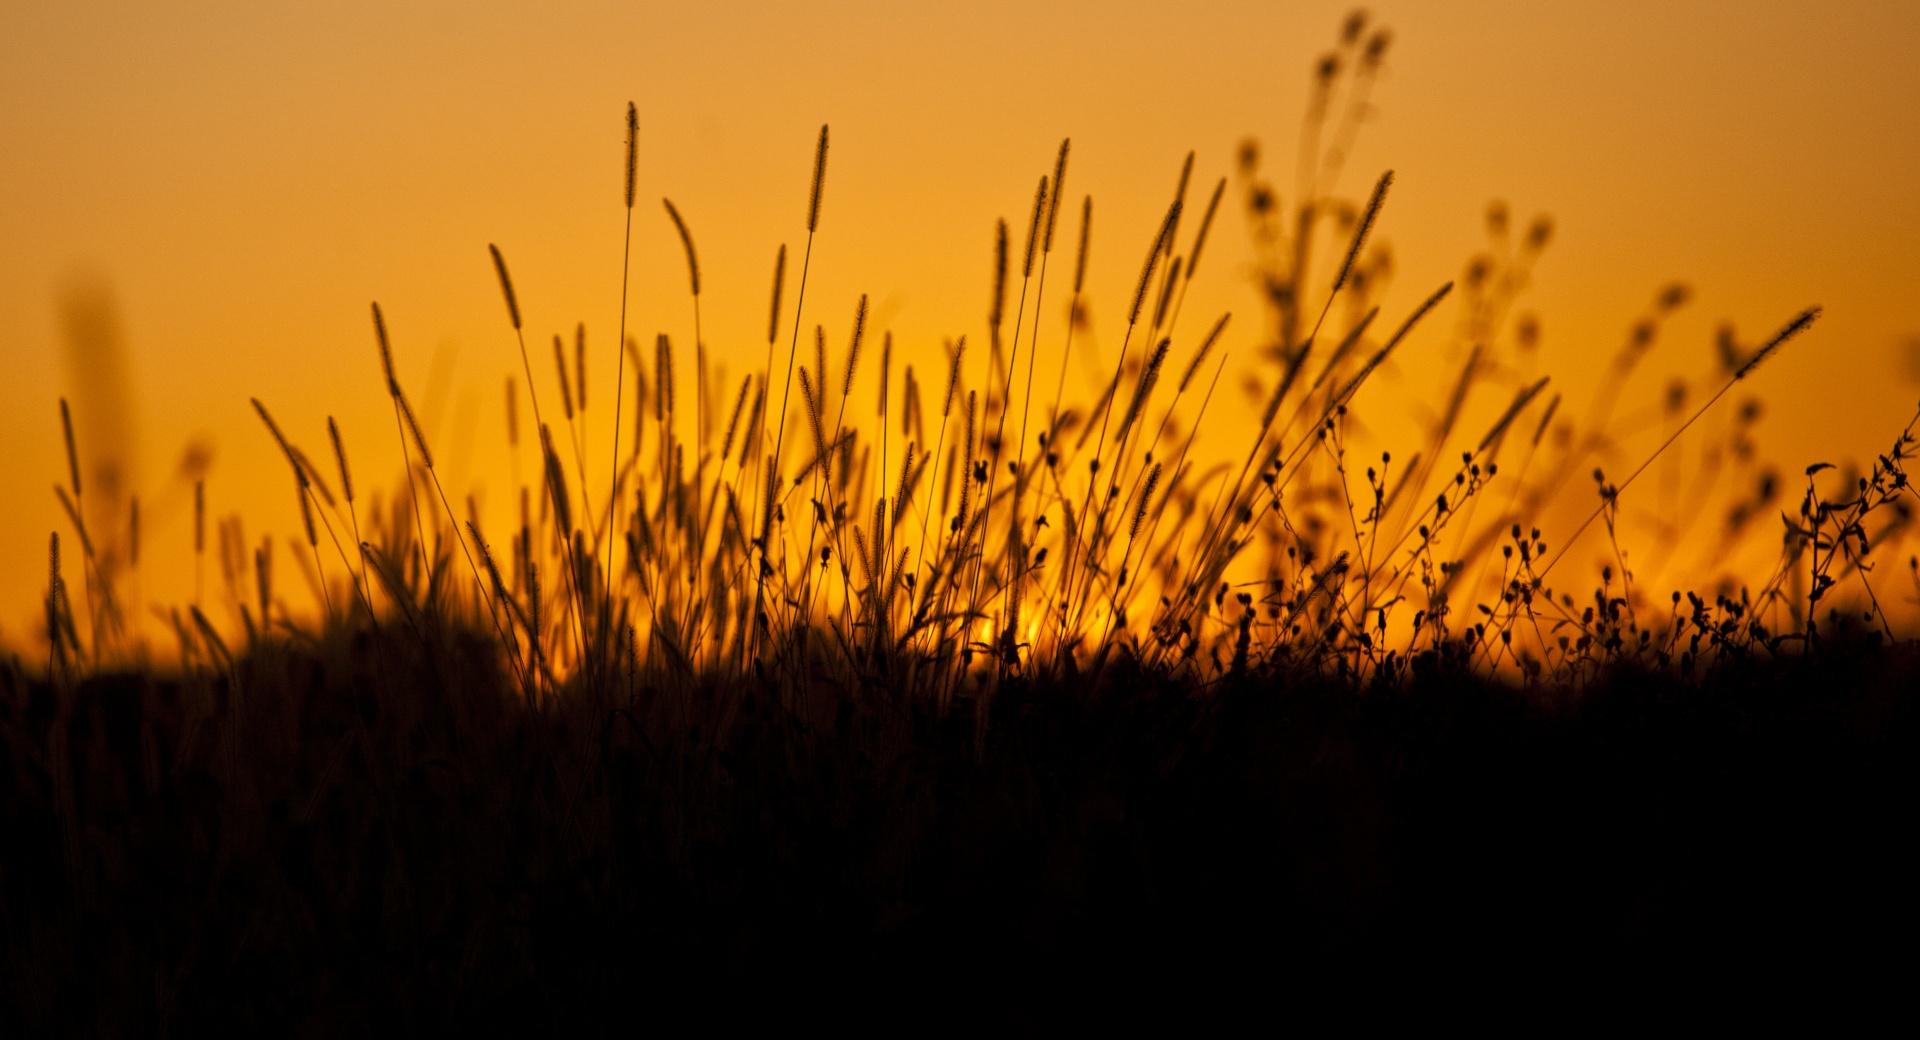 Sunset through Grass wallpapers HD quality